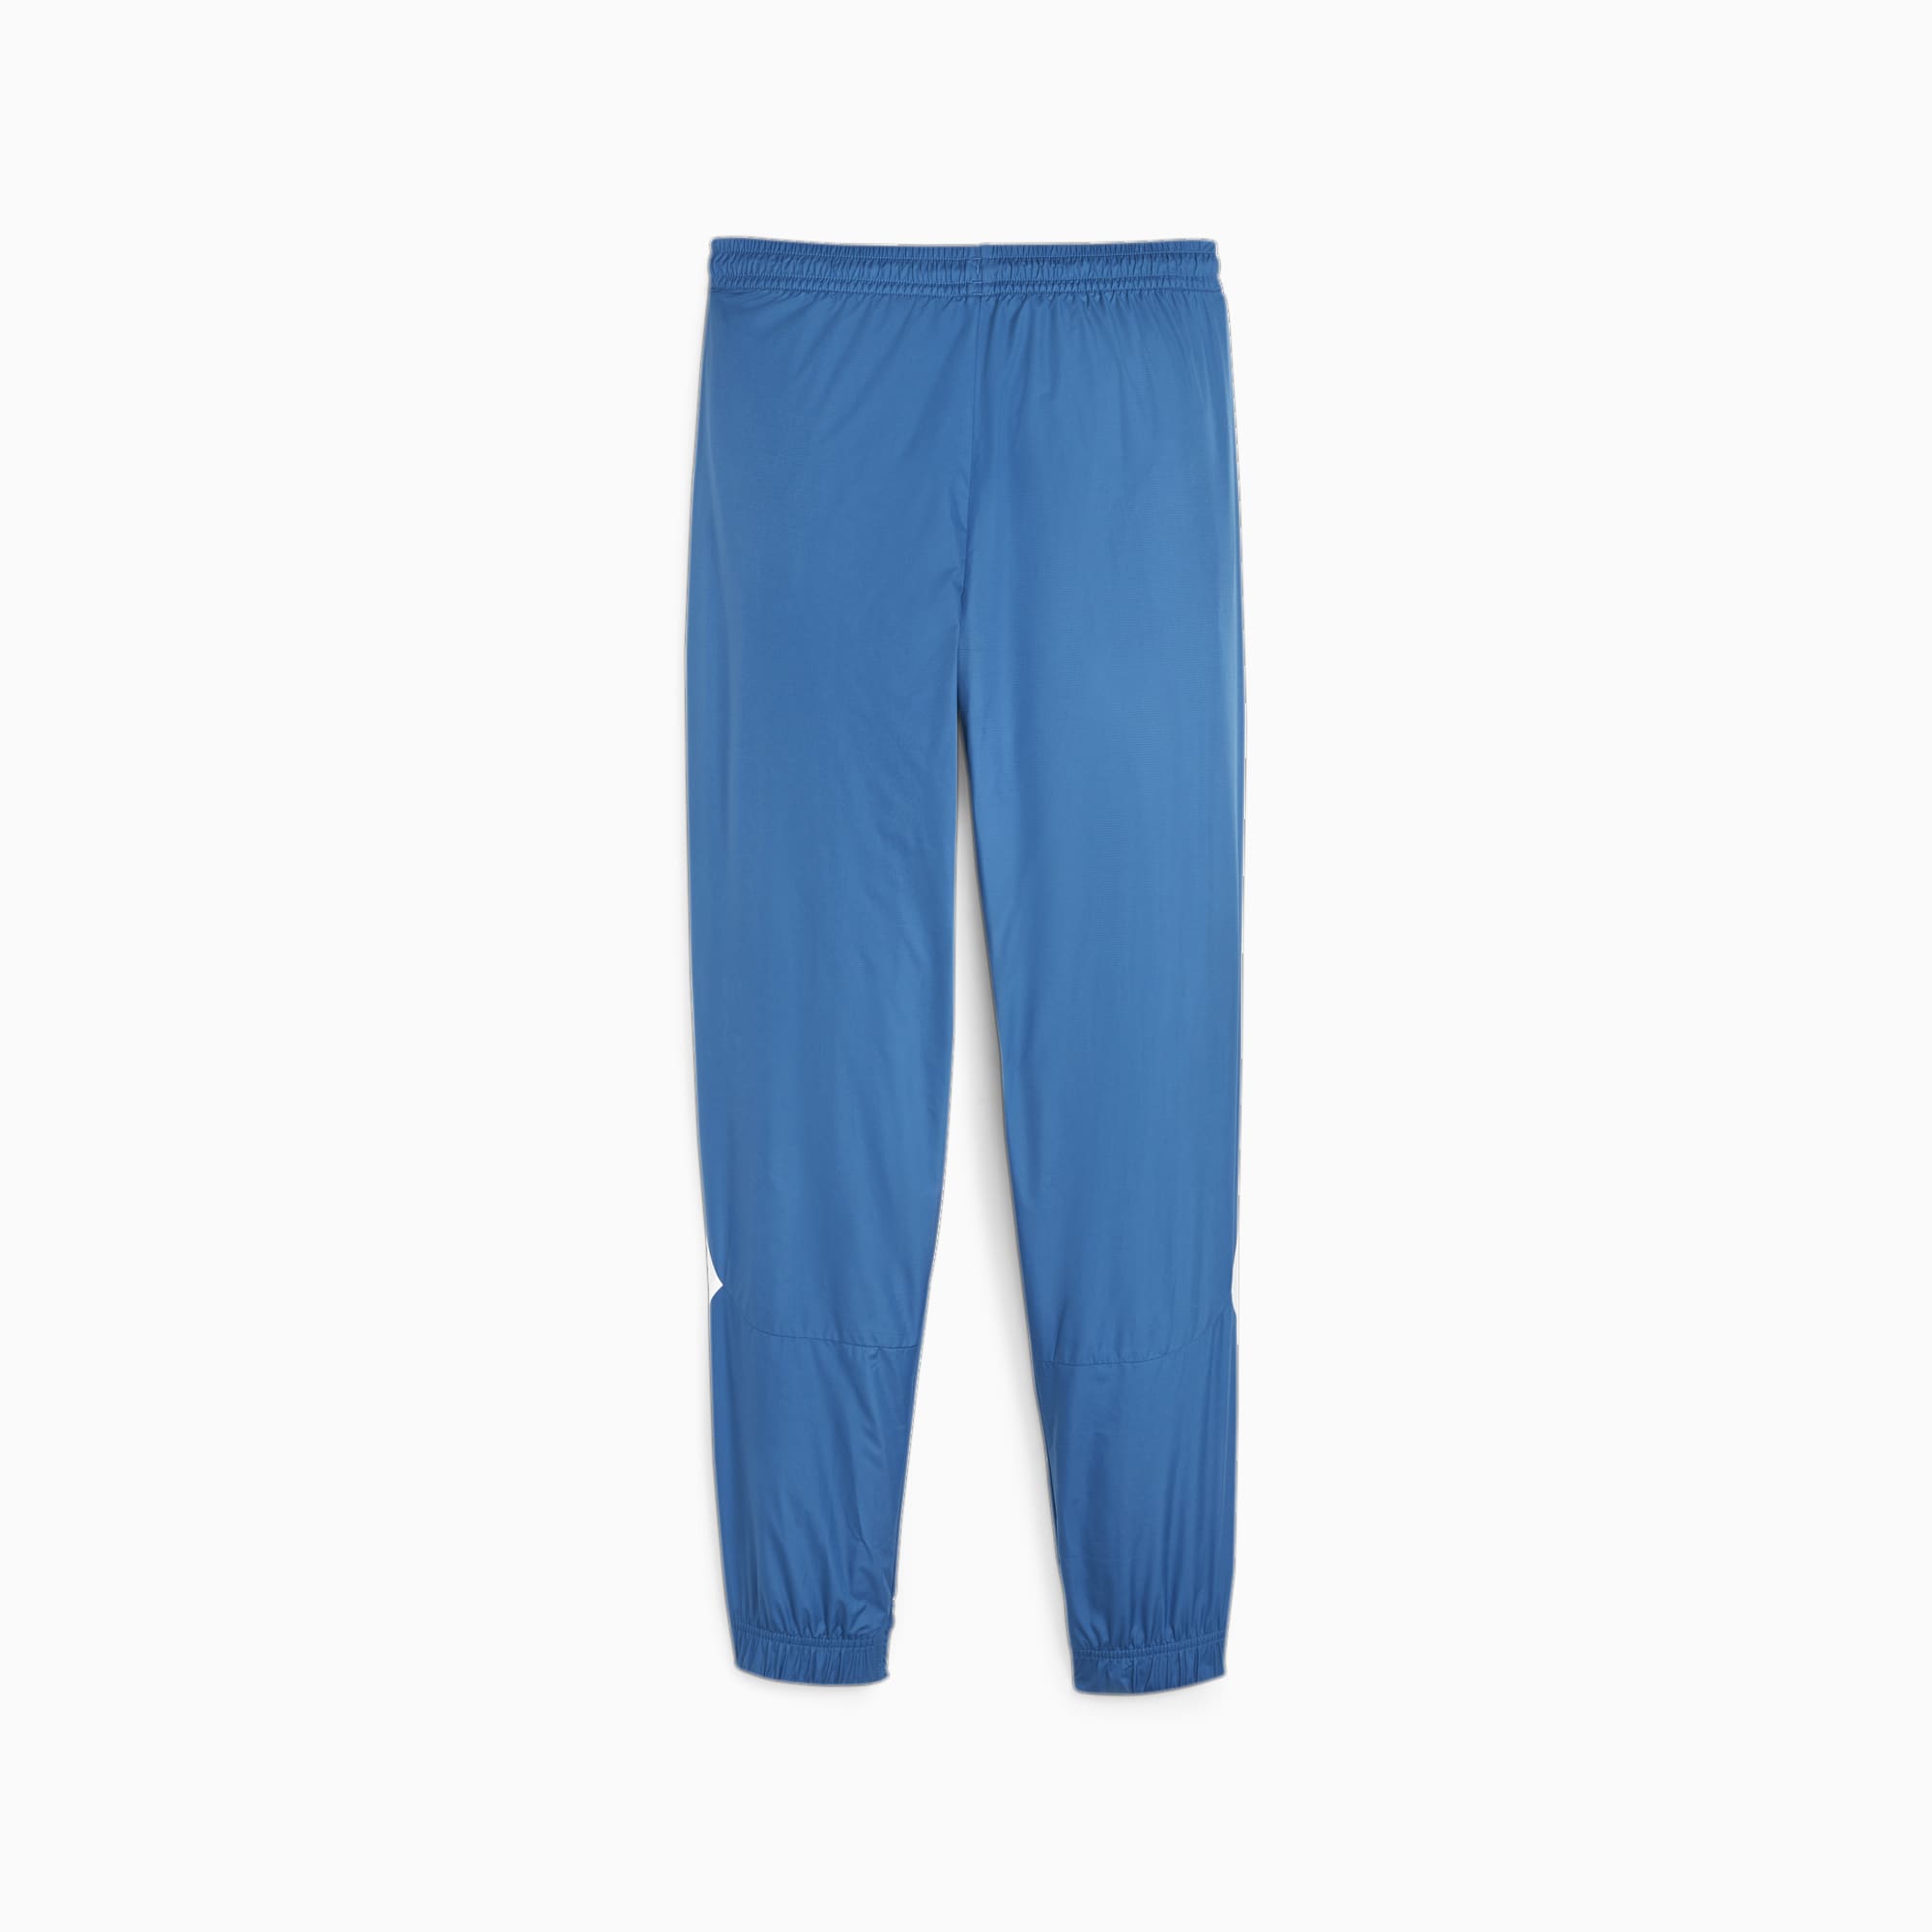 PUMA Manchester City F.C. Prematch Woven Pants Men, Lake Blue/White, Size L, Clothing